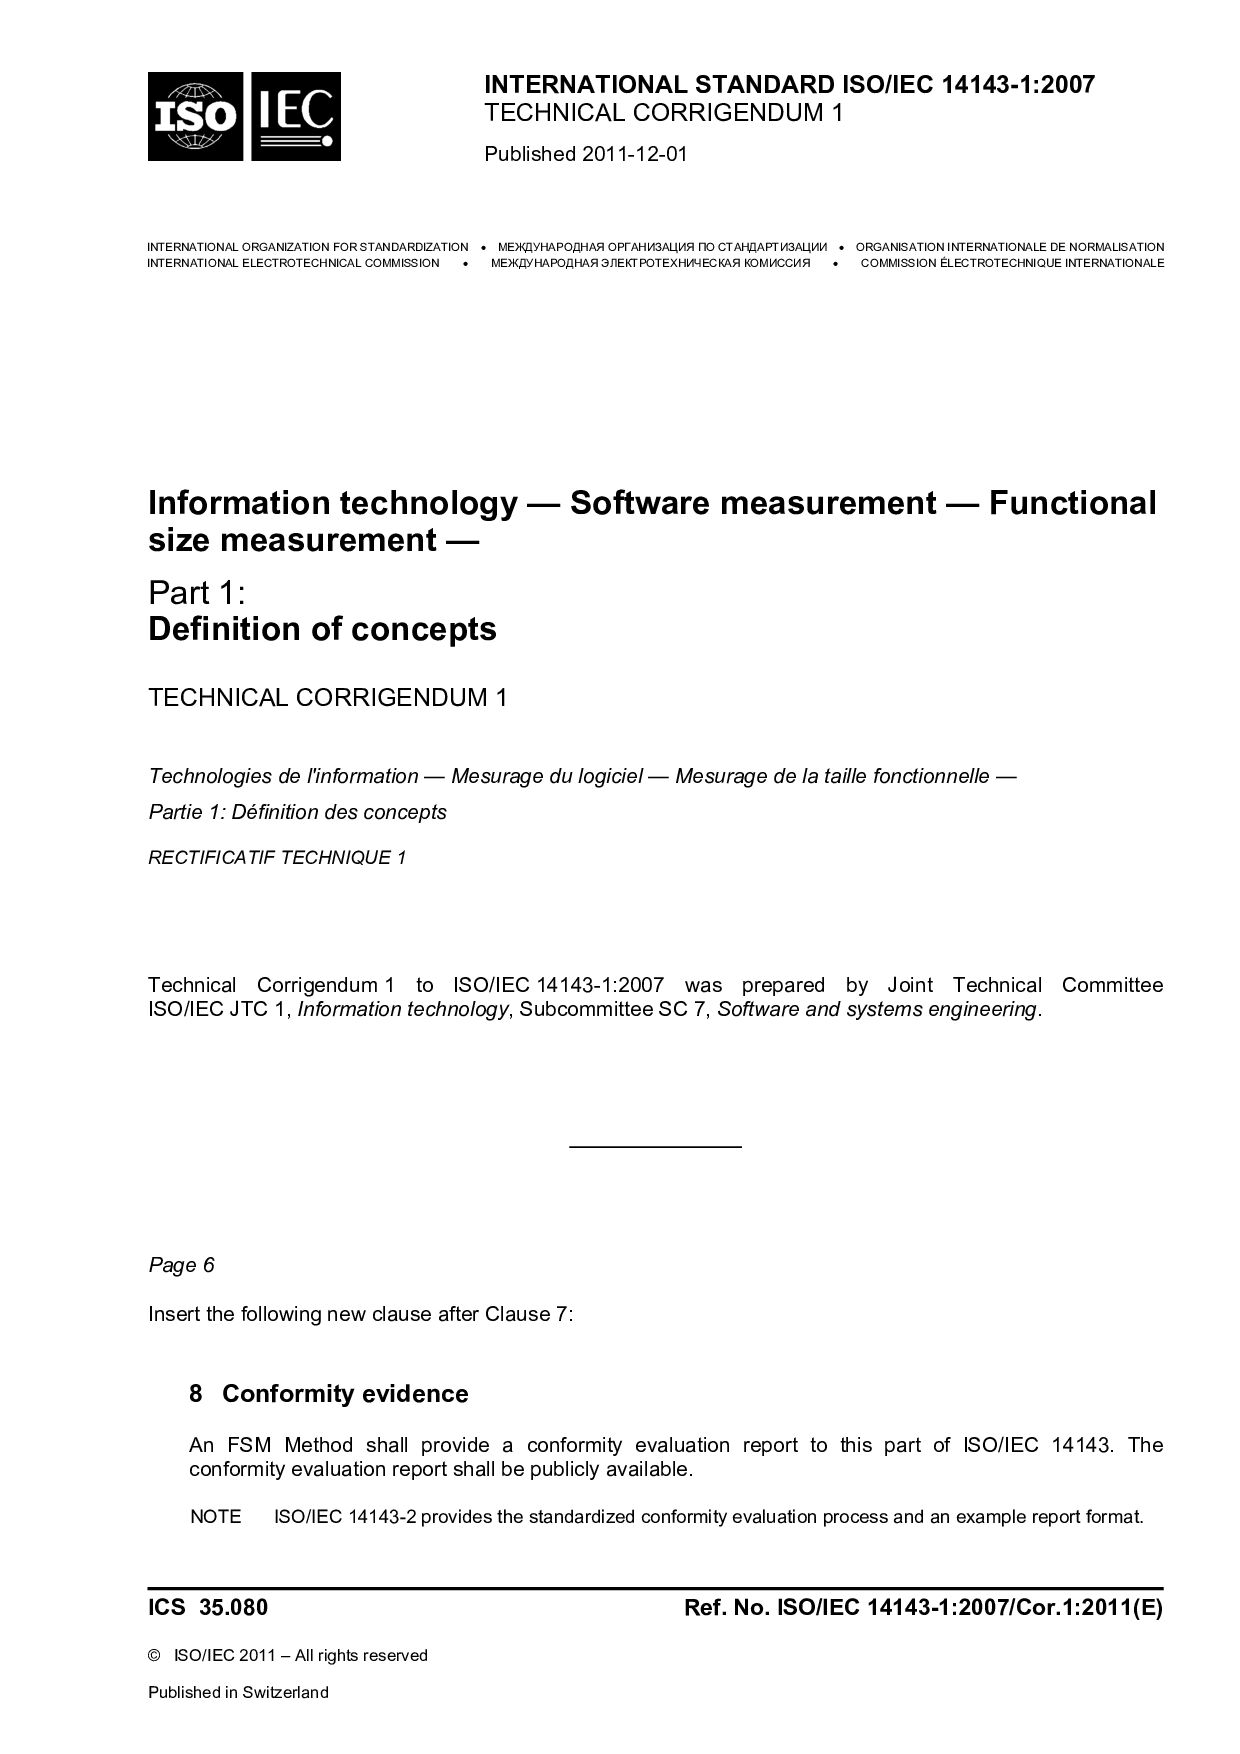 ISO/IEC 14143-1:2007/Cor 1:2011